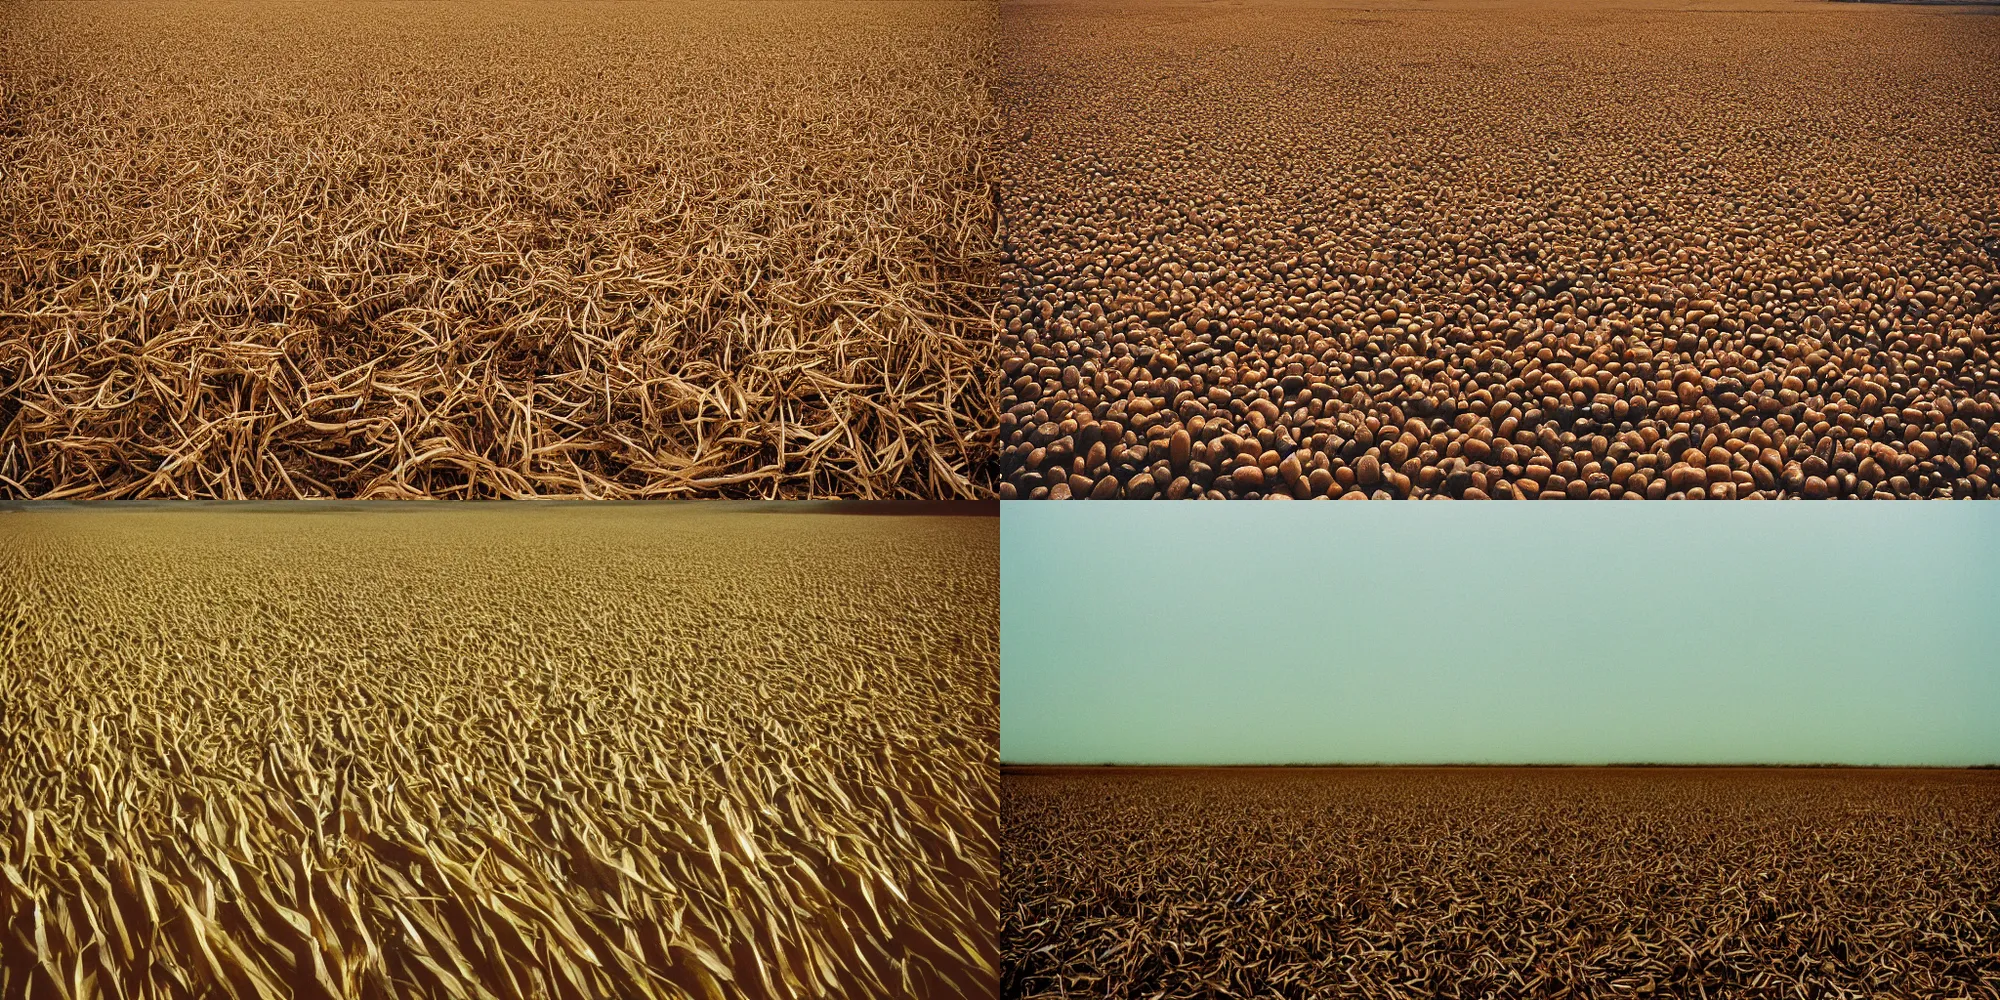 Prompt: corn wasteland, cinestill 800t 50mm eastmancolor, liminal space